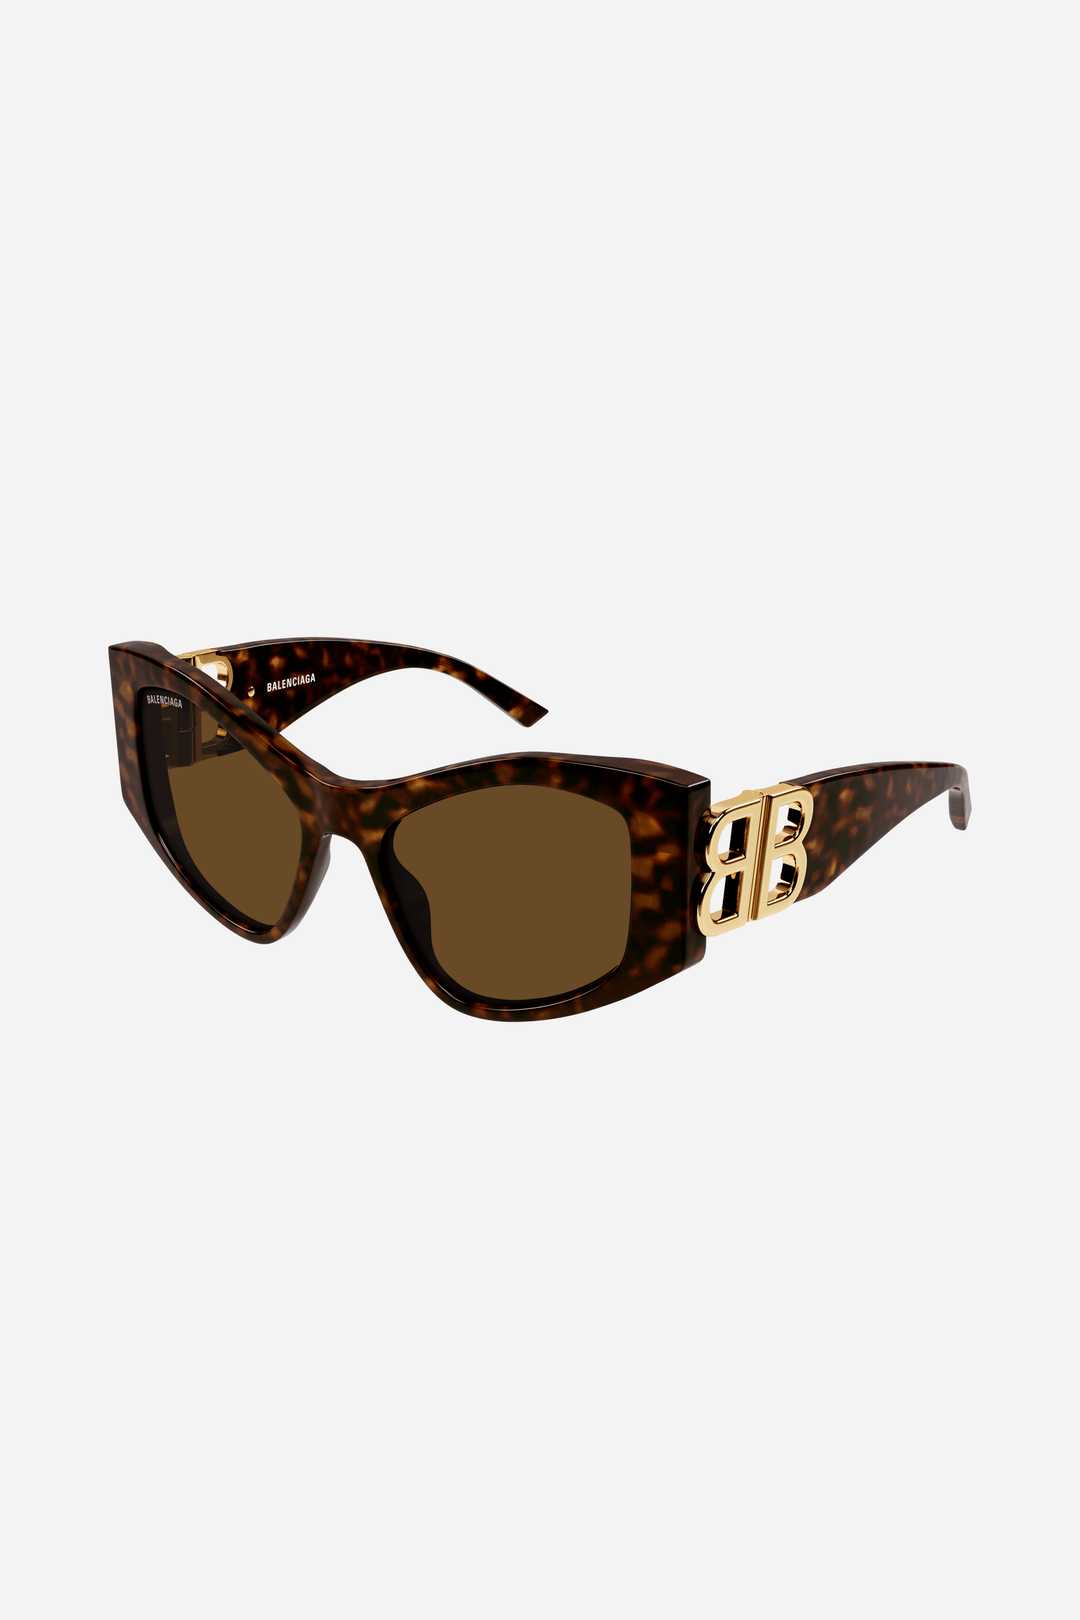 Balenciaga Dynasty over havana sunglasses featuring BB gold logo - Eyewear Club